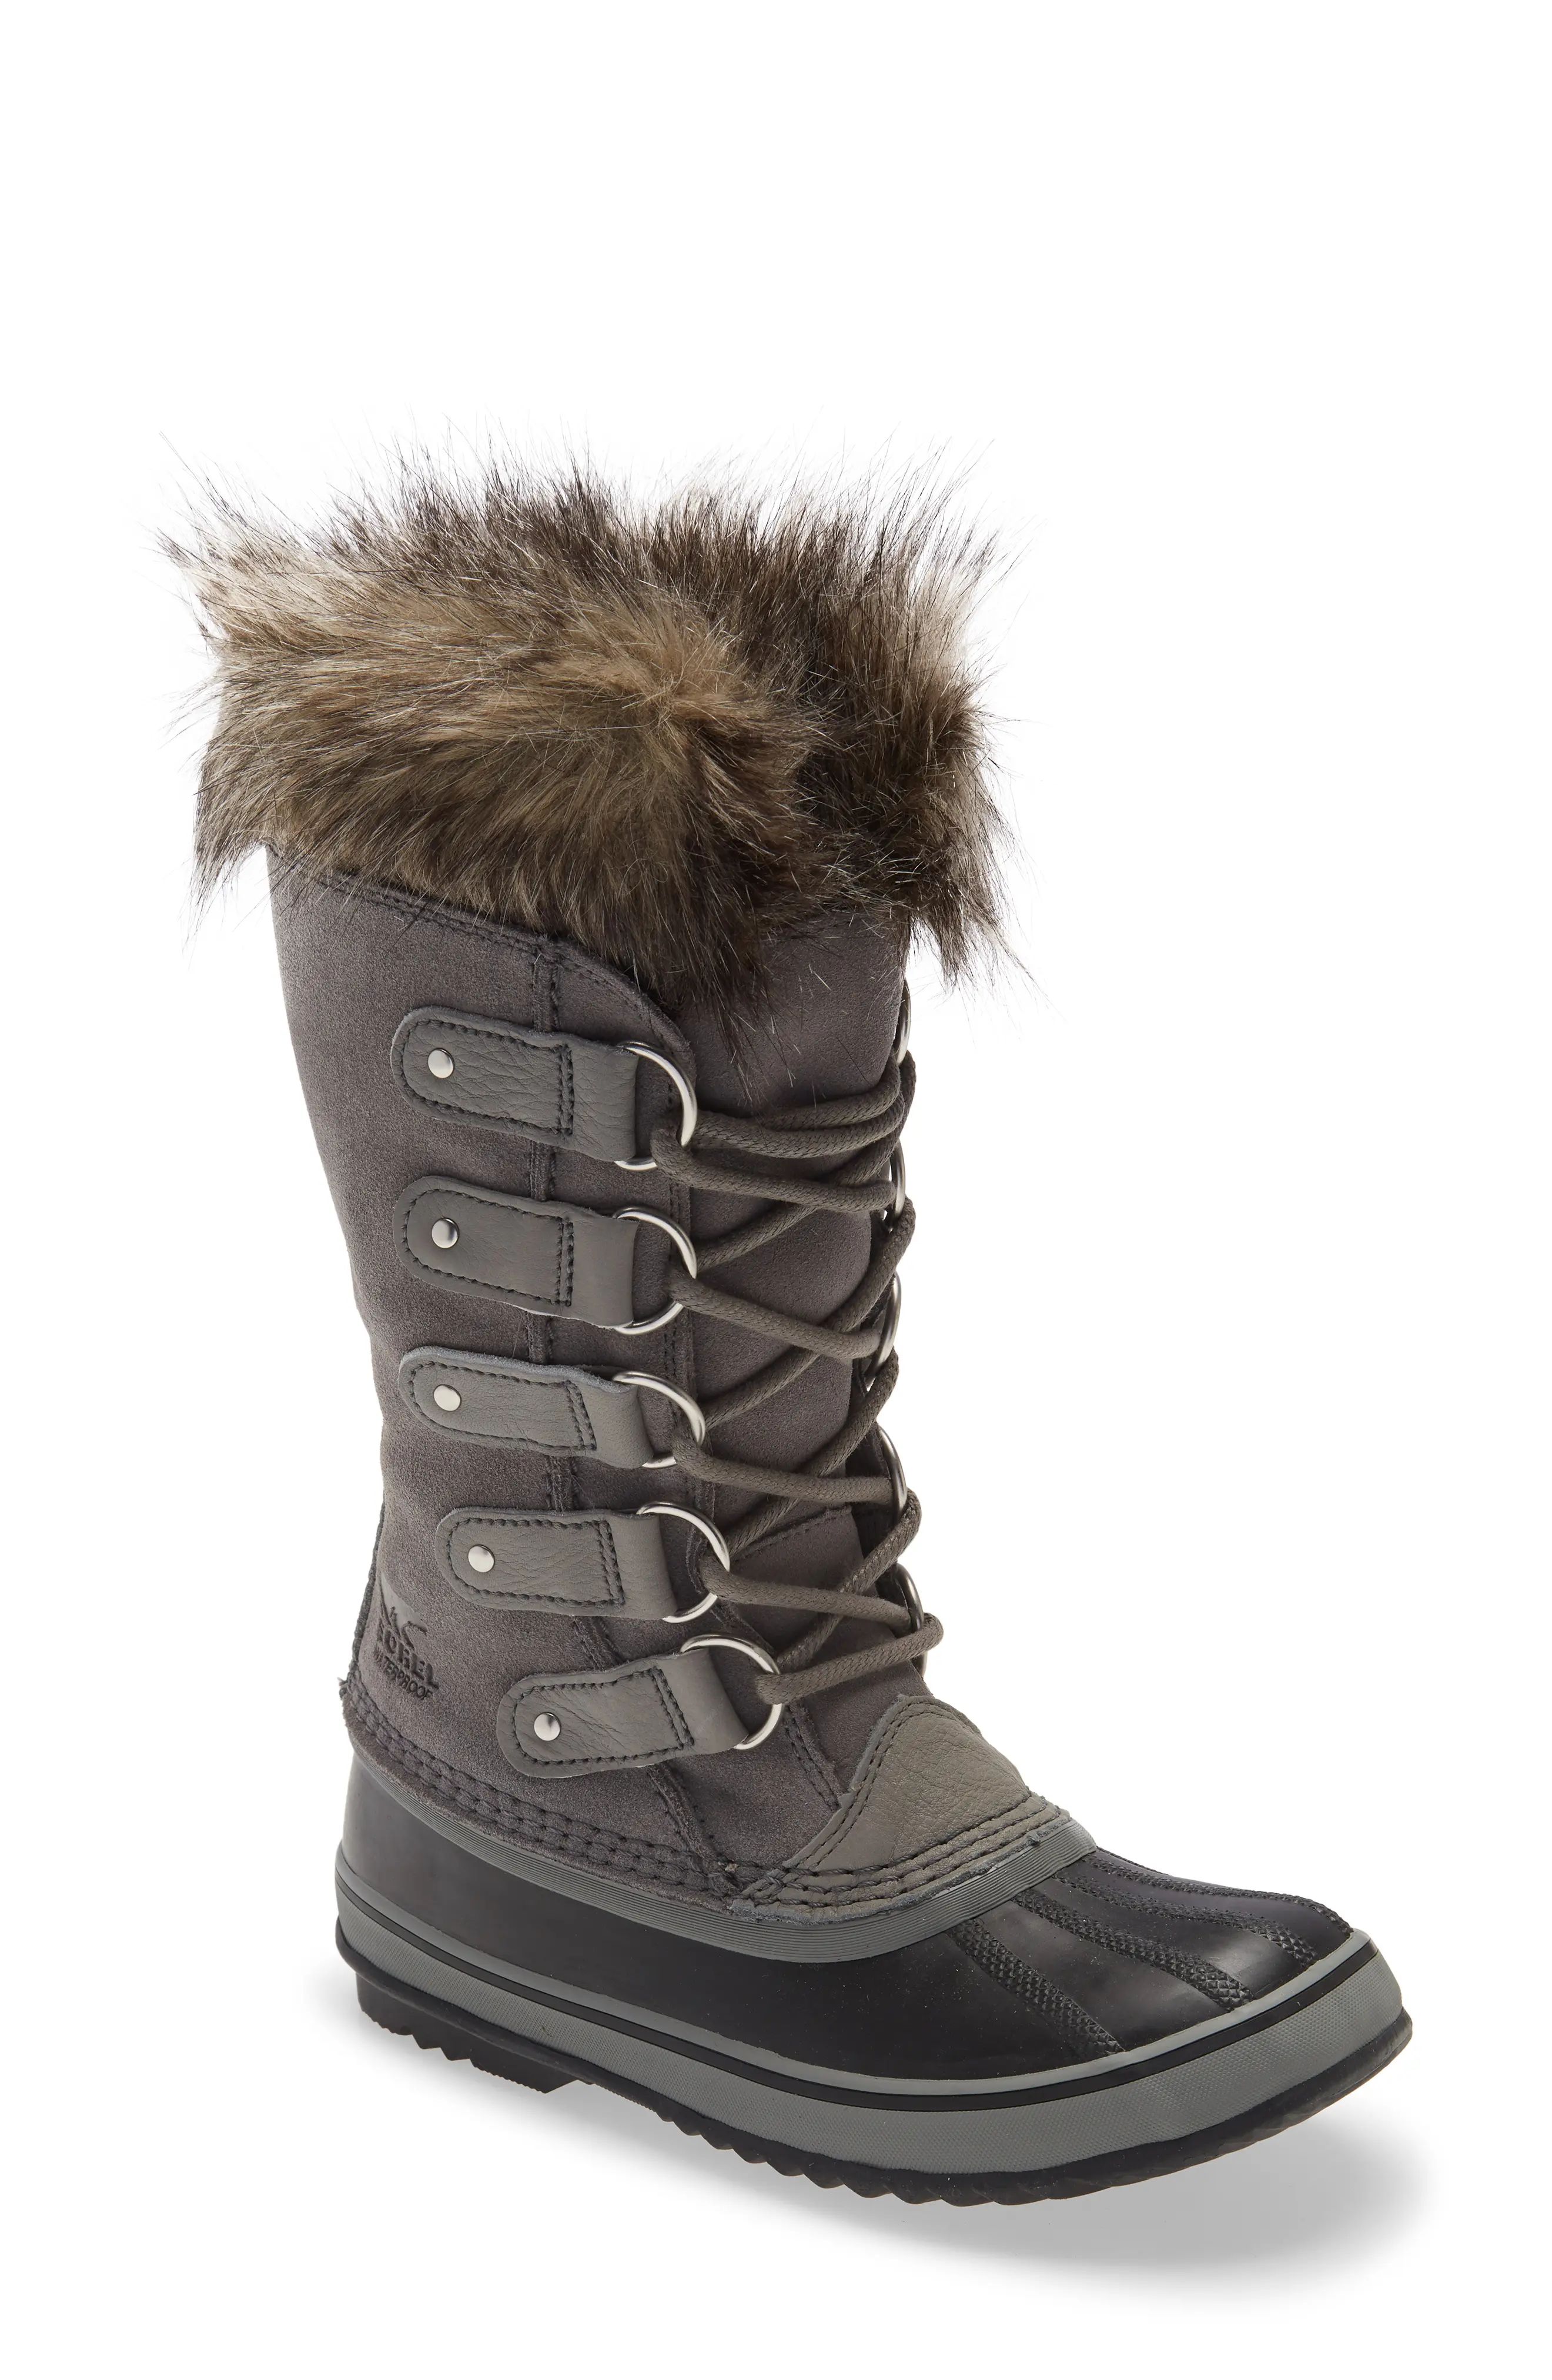 Women's Sorel Joan Of Arctic Faux Fur Waterproof Snow Boot, Size 9 M - Grey | Nordstrom